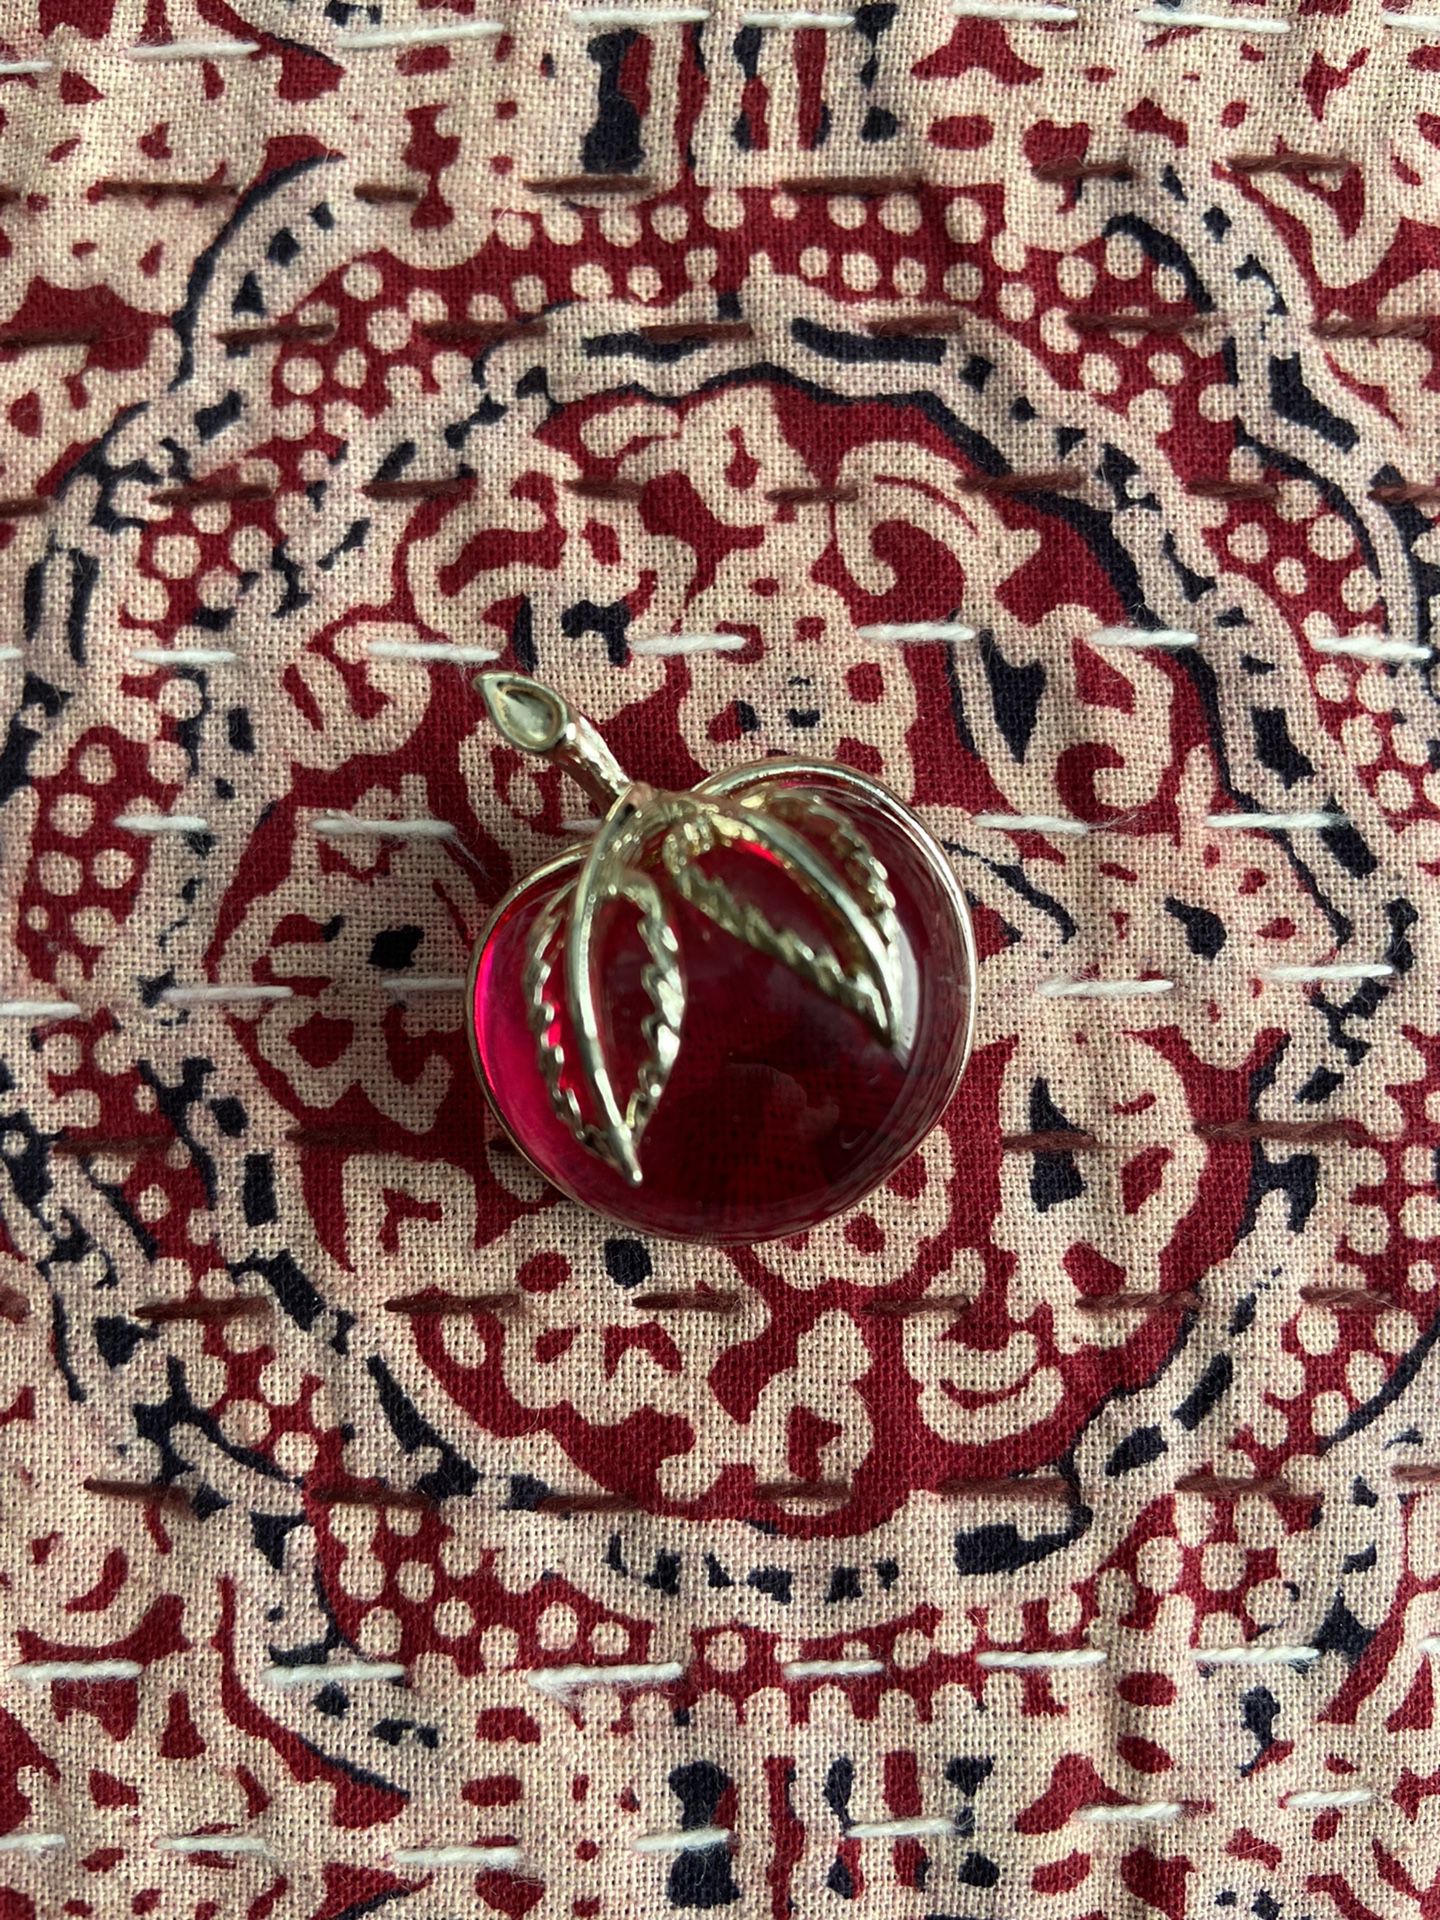 Beautiful Cherry Blossom Pin!